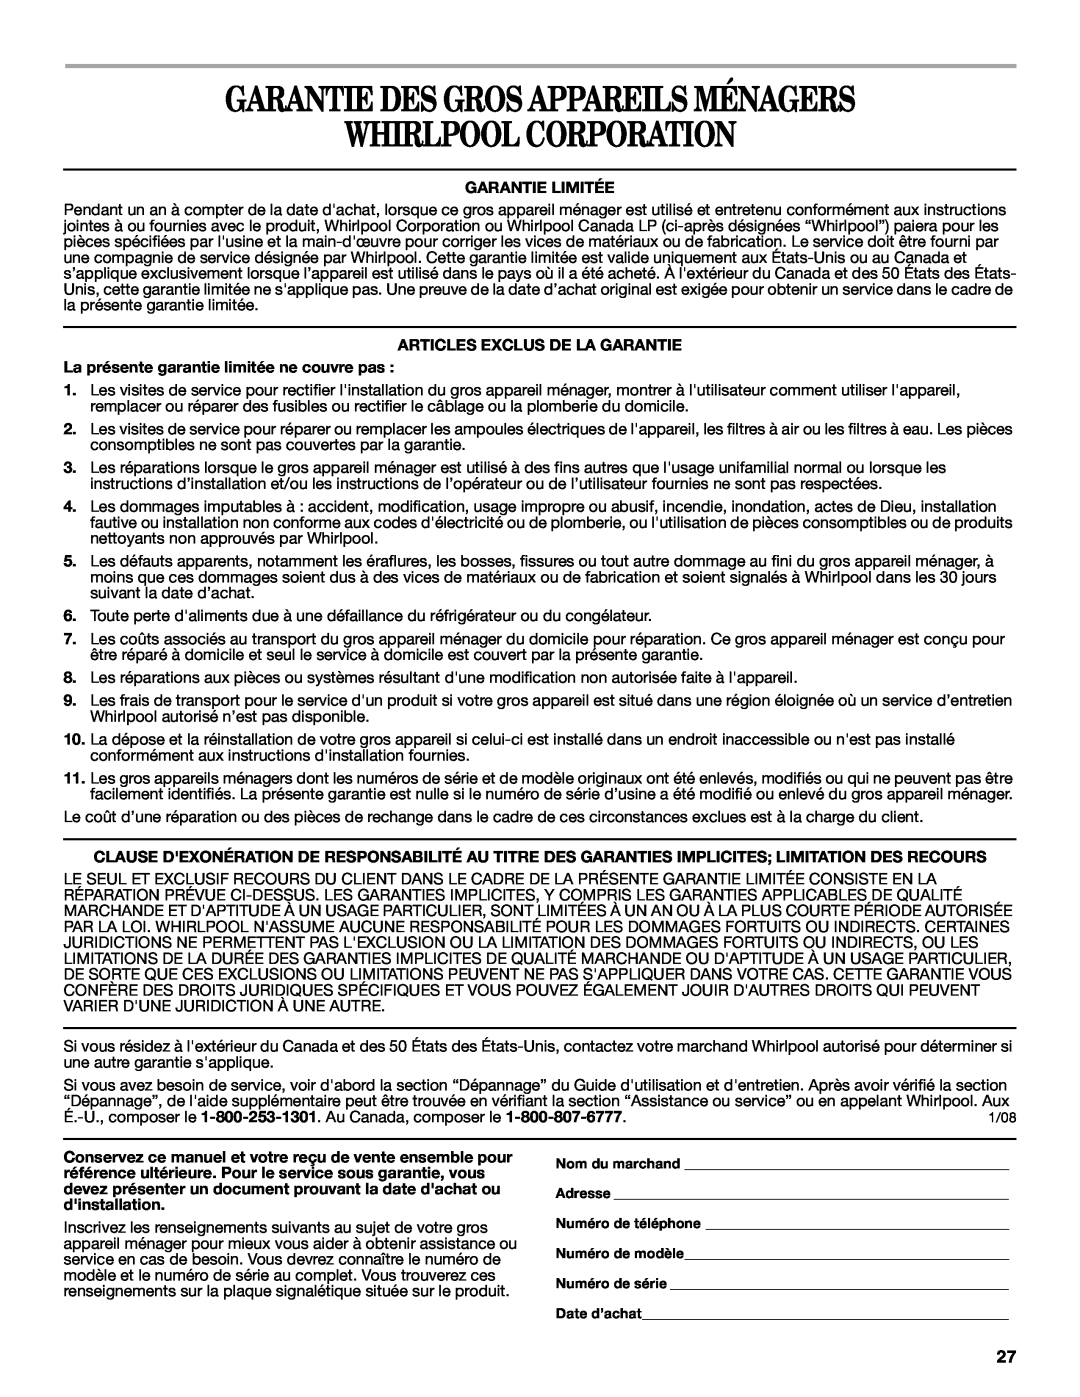 Whirlpool RBS275PV manual Garantie Des Gros Appareils Ménagers, Whirlpool Corporation, Garantie Limitée 